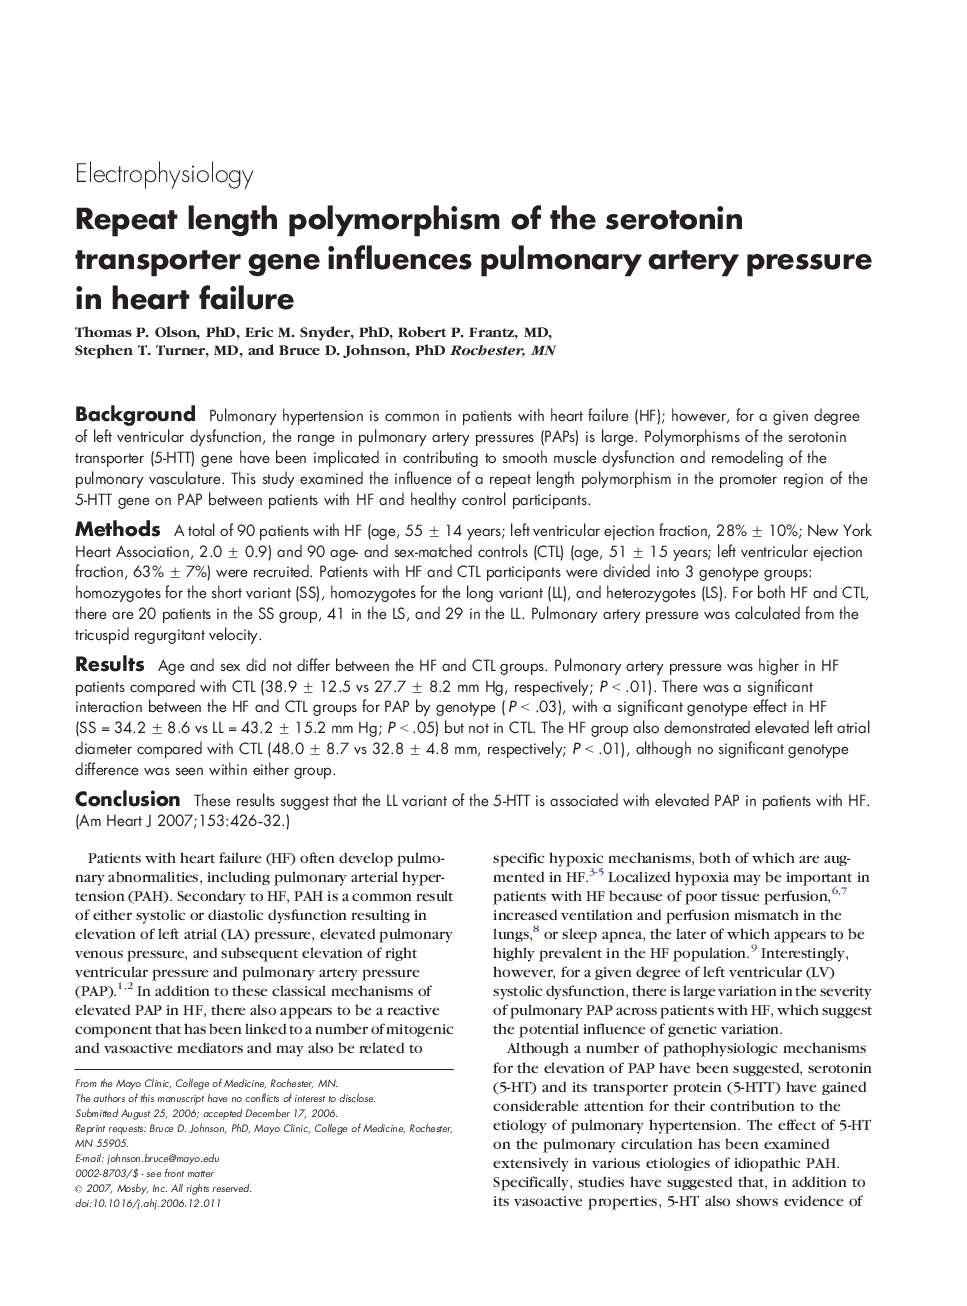 Repeat length polymorphism of the serotonin transporter gene influences pulmonary artery pressure in heart failure